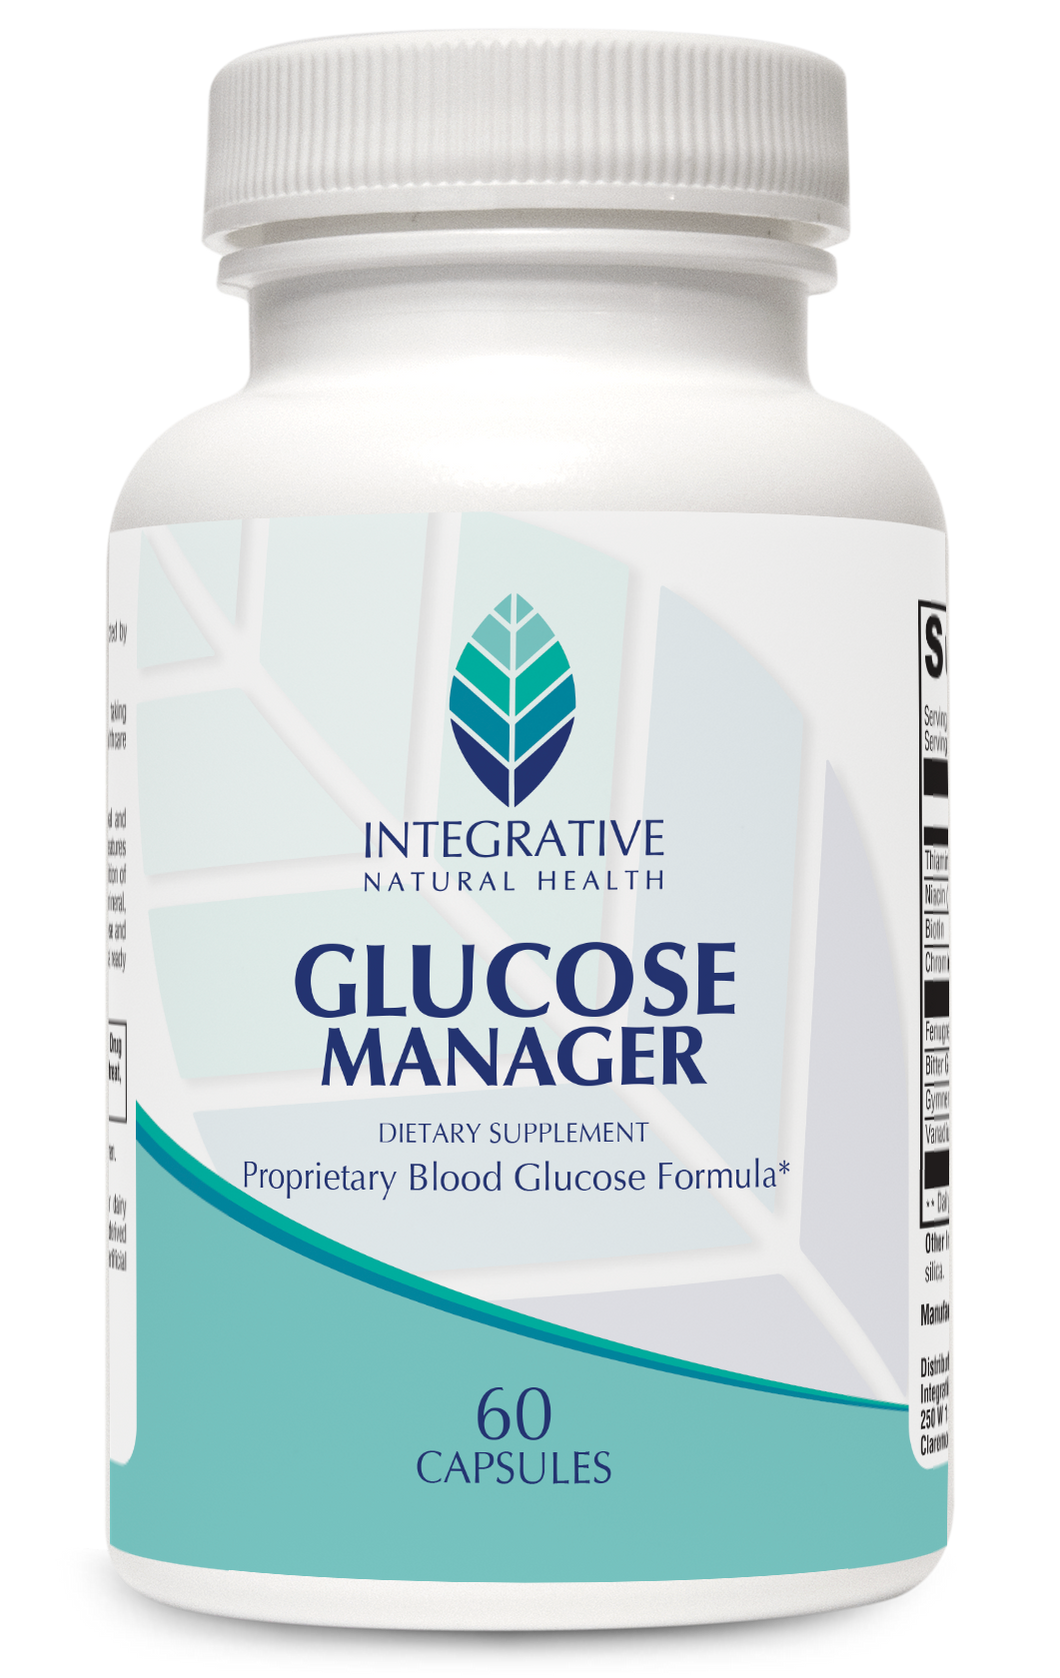 Glucose manager